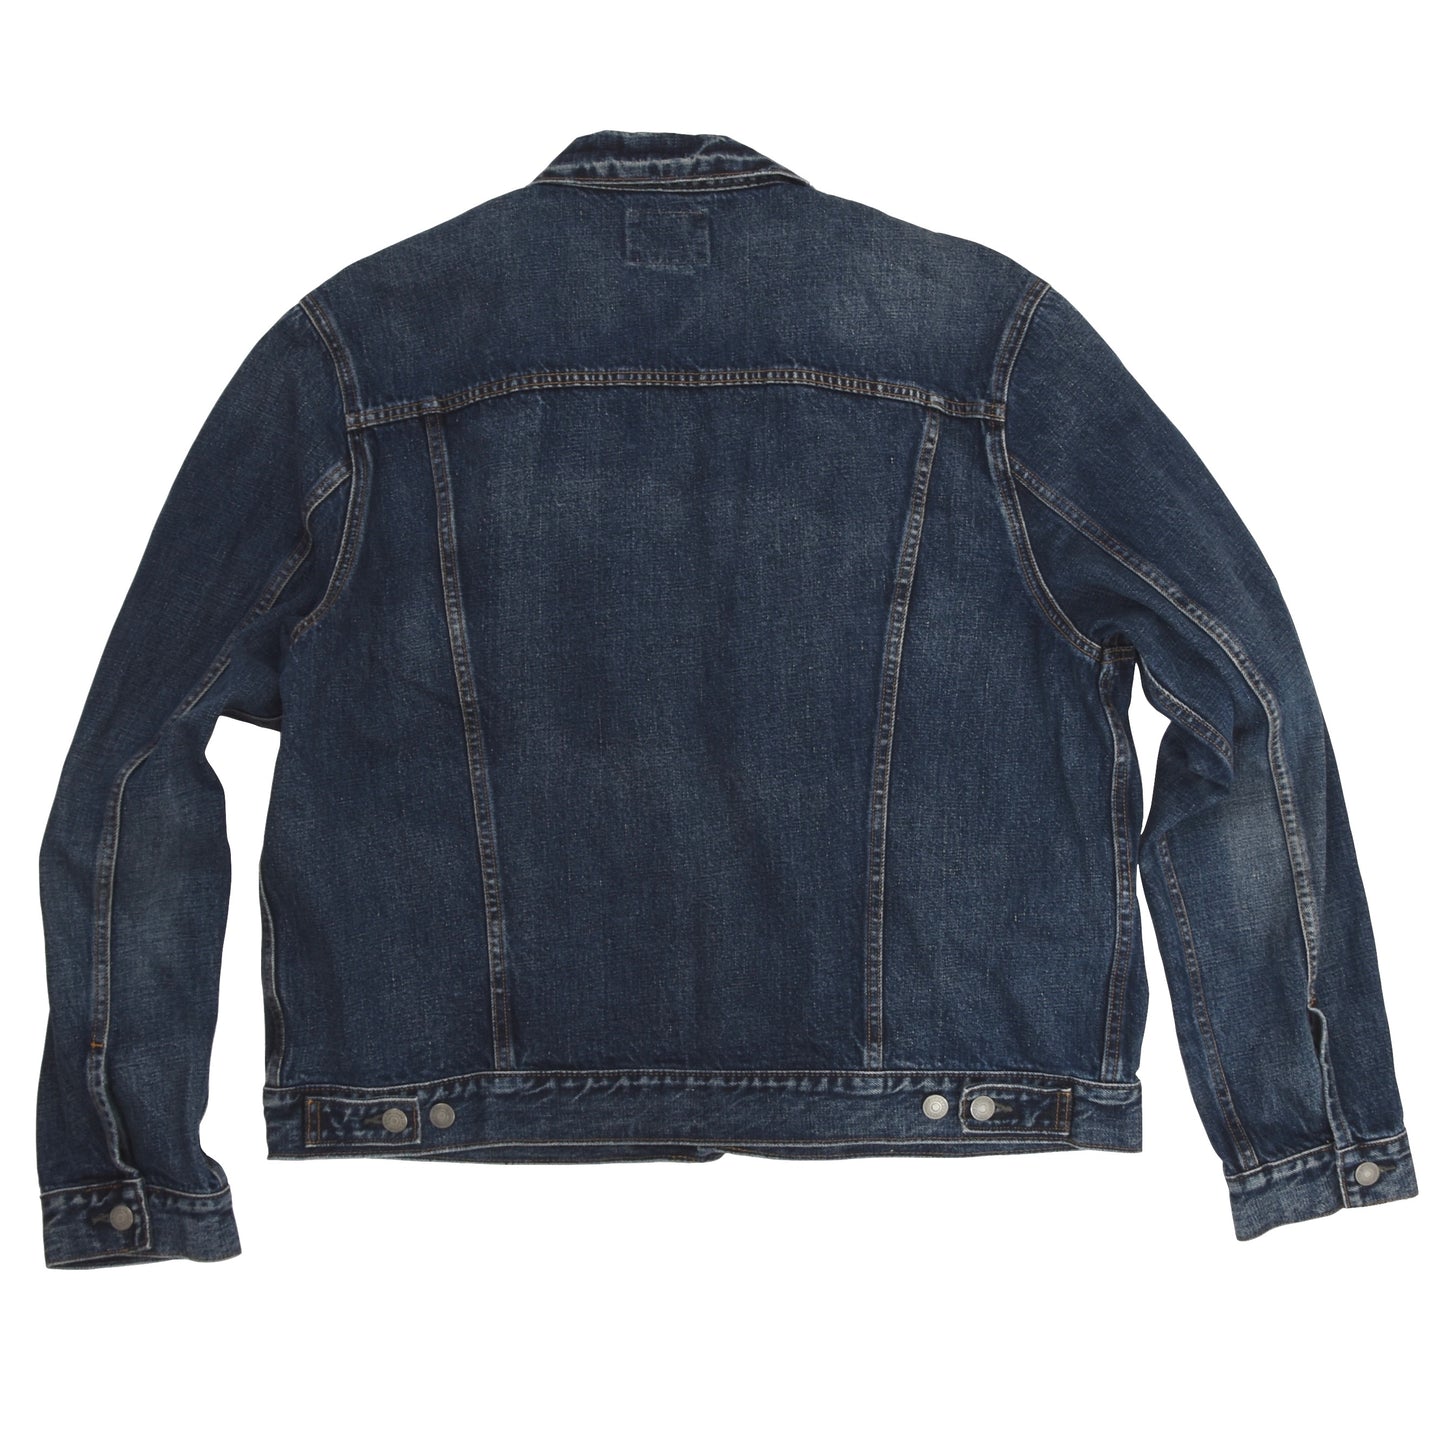 Polo Ralph Lauren Distressed Jean Jacket Size XL - Blue